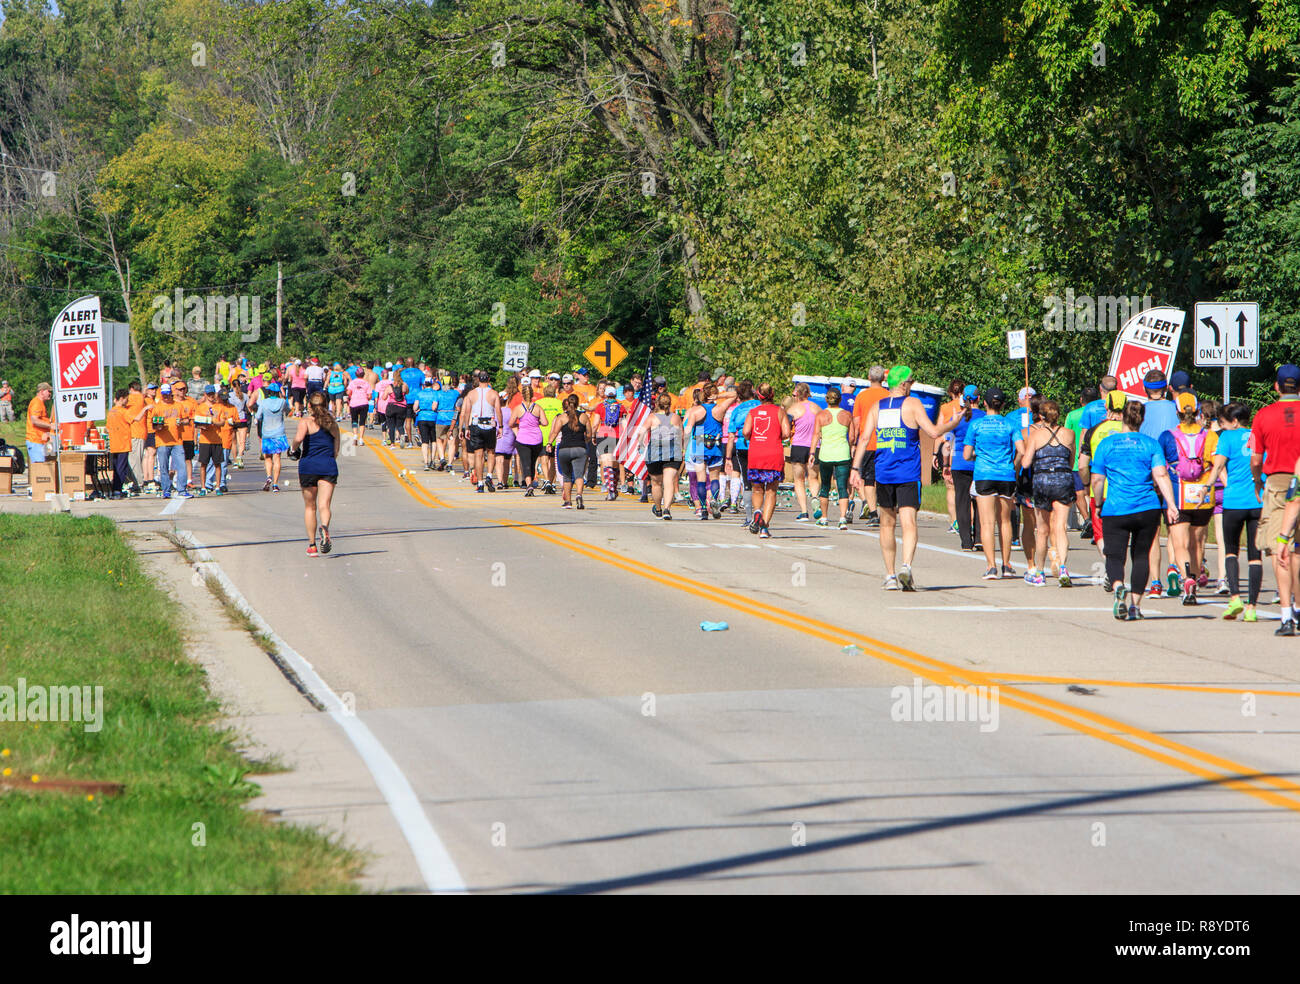 Runners at the 2018 Dayton Air Force marathon and half marathon Stock Photo